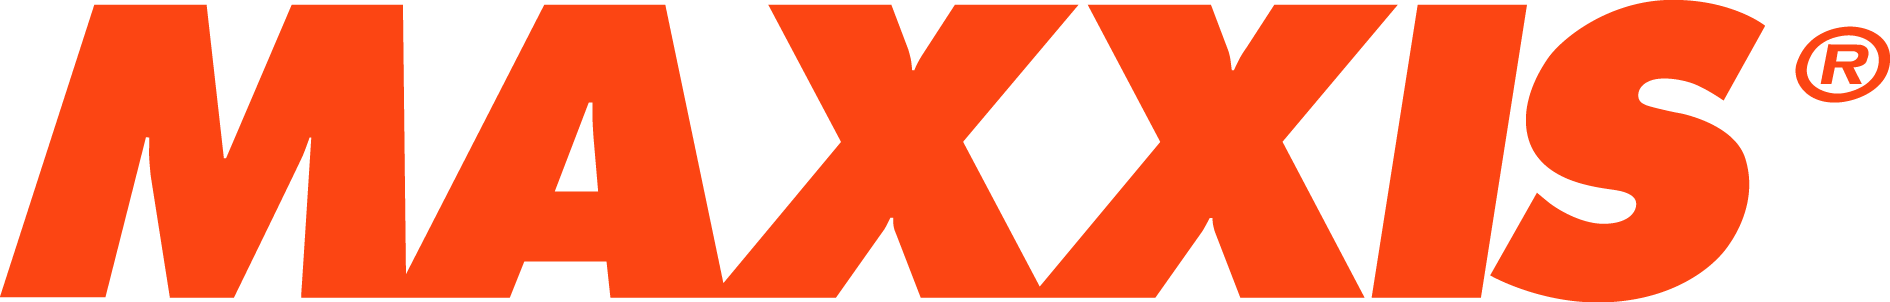 Maxxis Logo - LogoDix